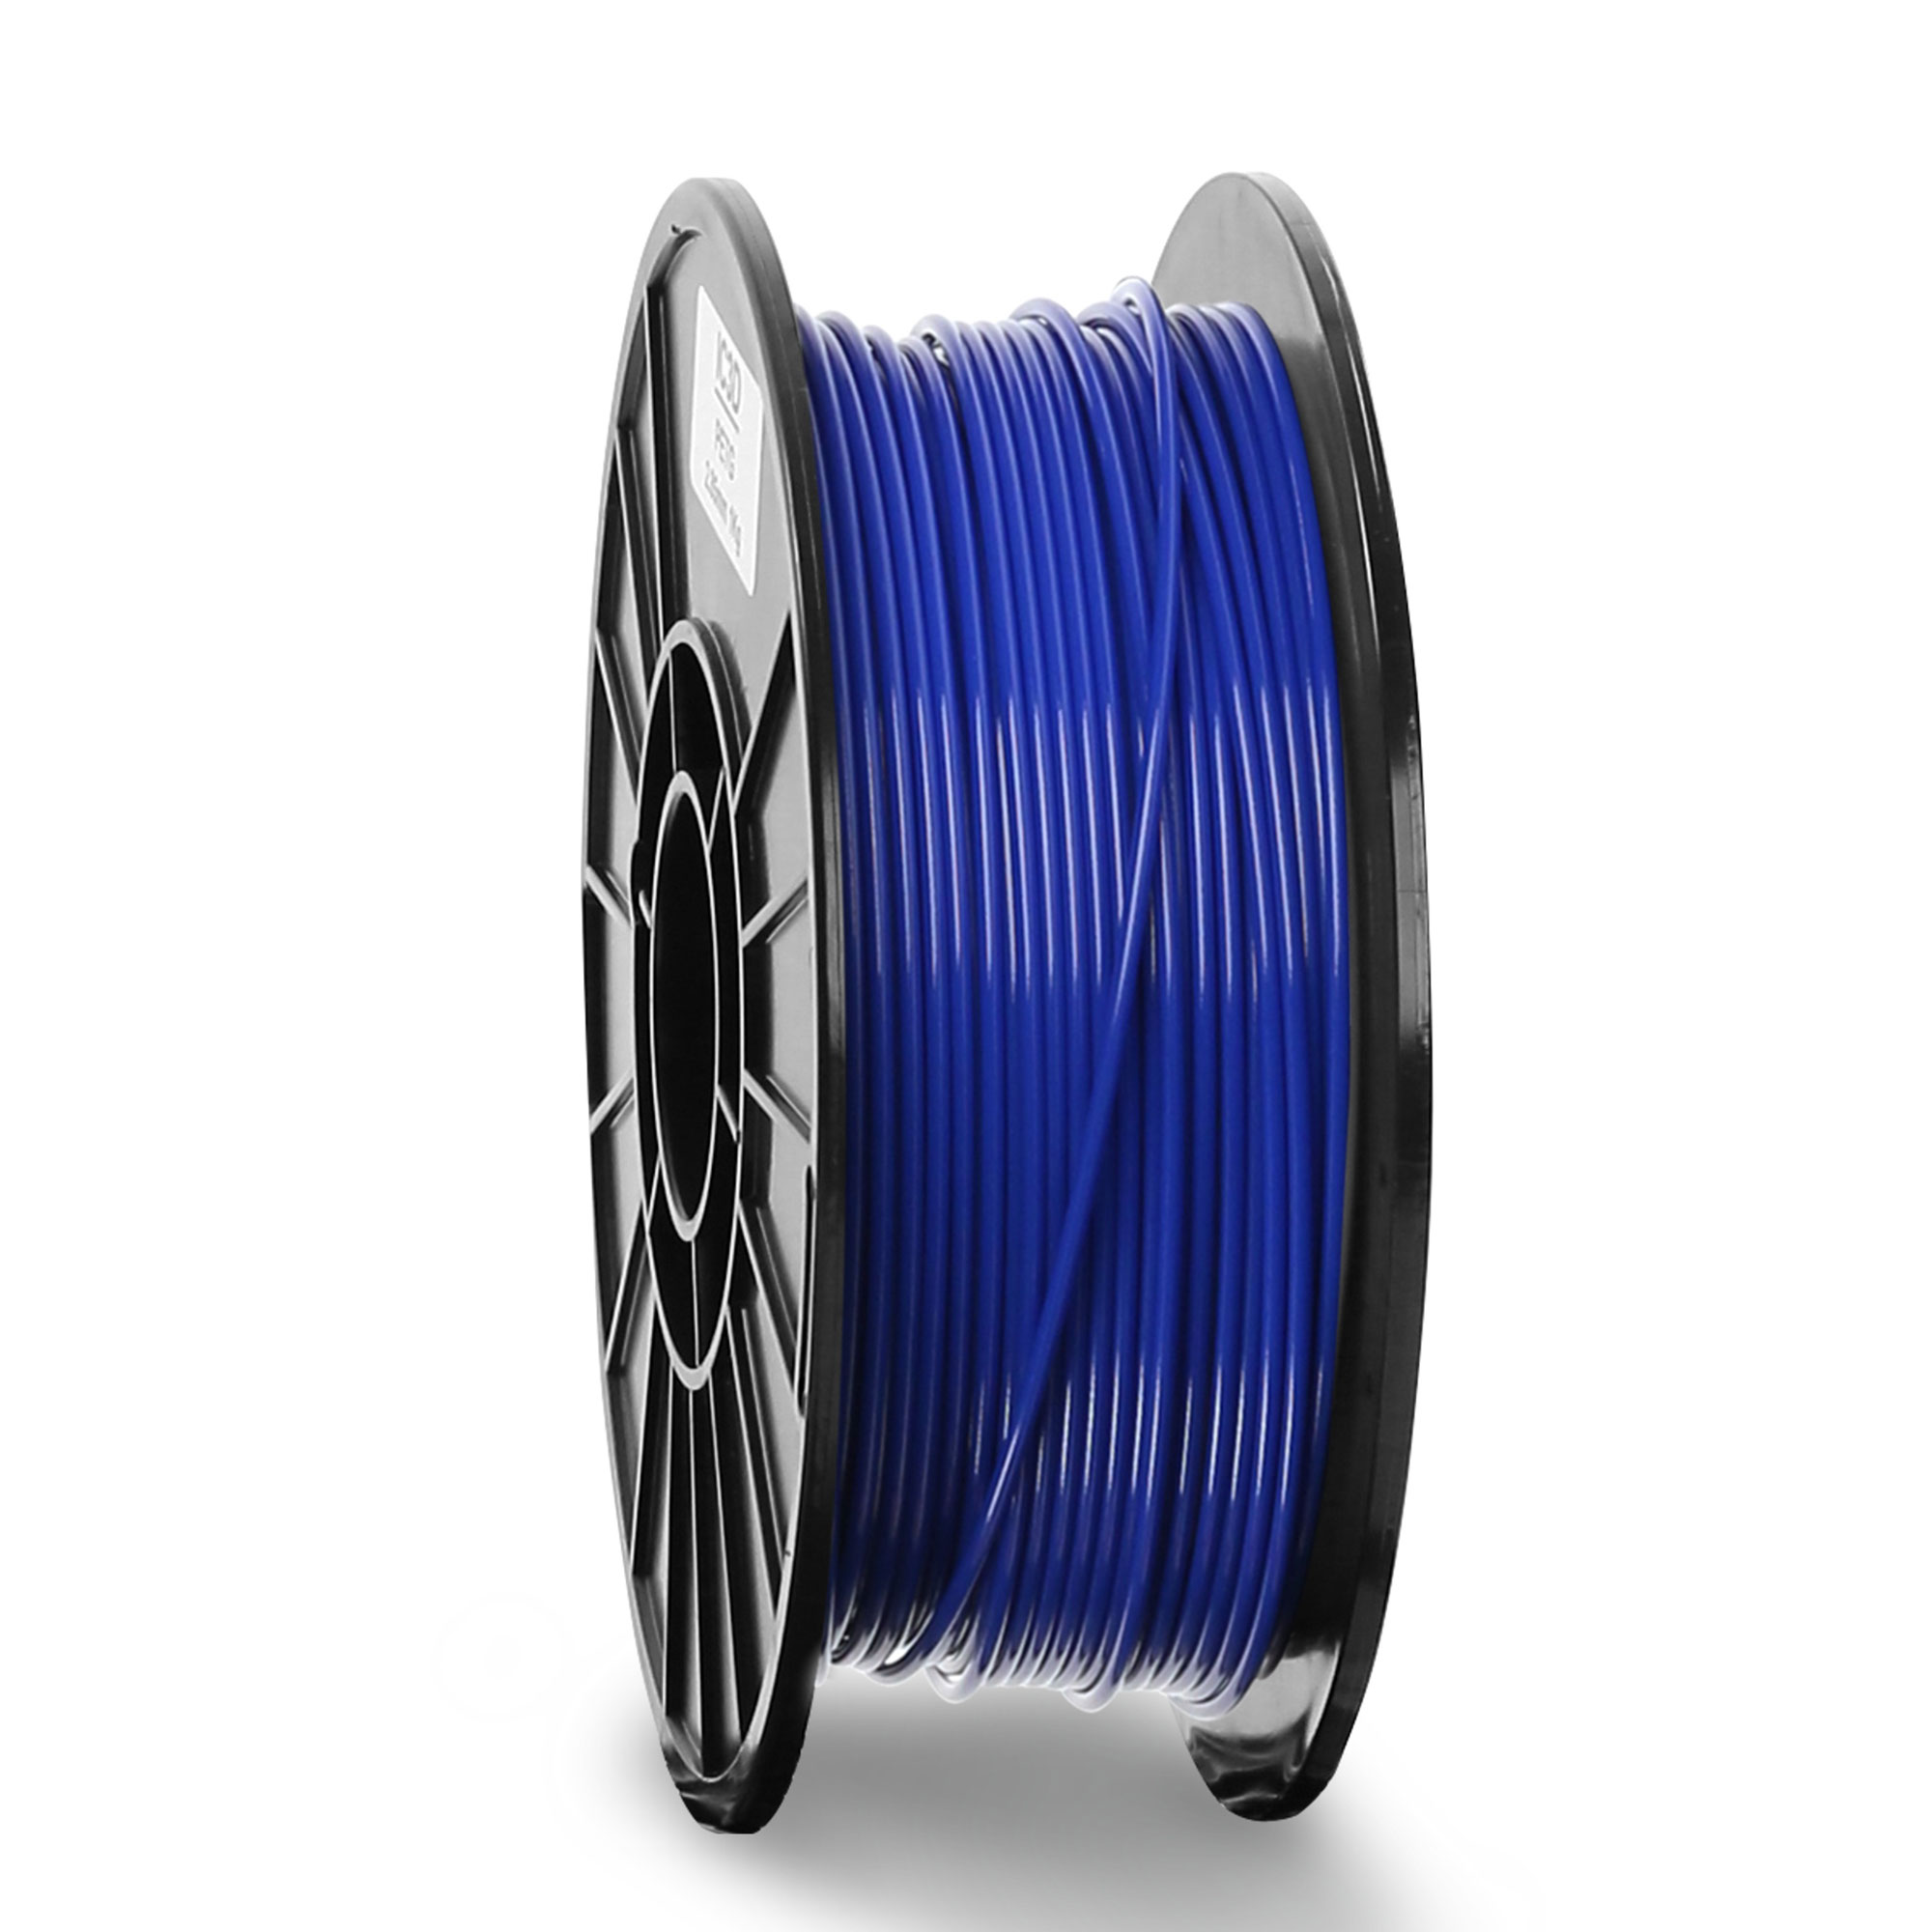 Ic3d Petg Blue, 3mm Filament, 1kg